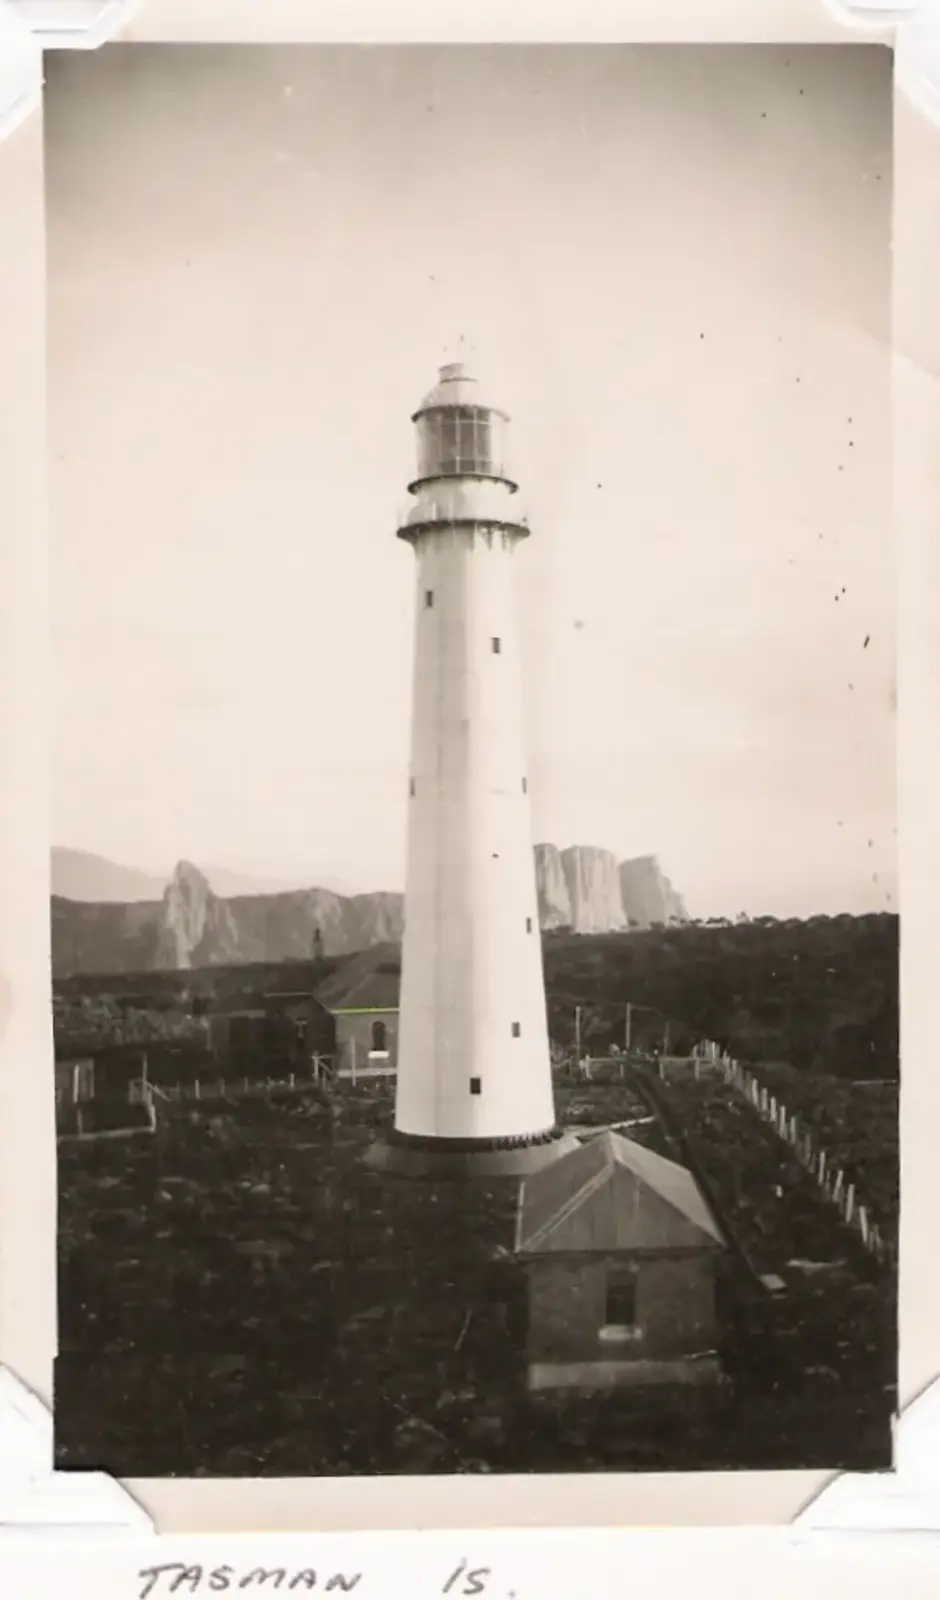 Tasman Island Lighthouse circa 1927 with the original Chance Brothers lantern room & 1st order lens